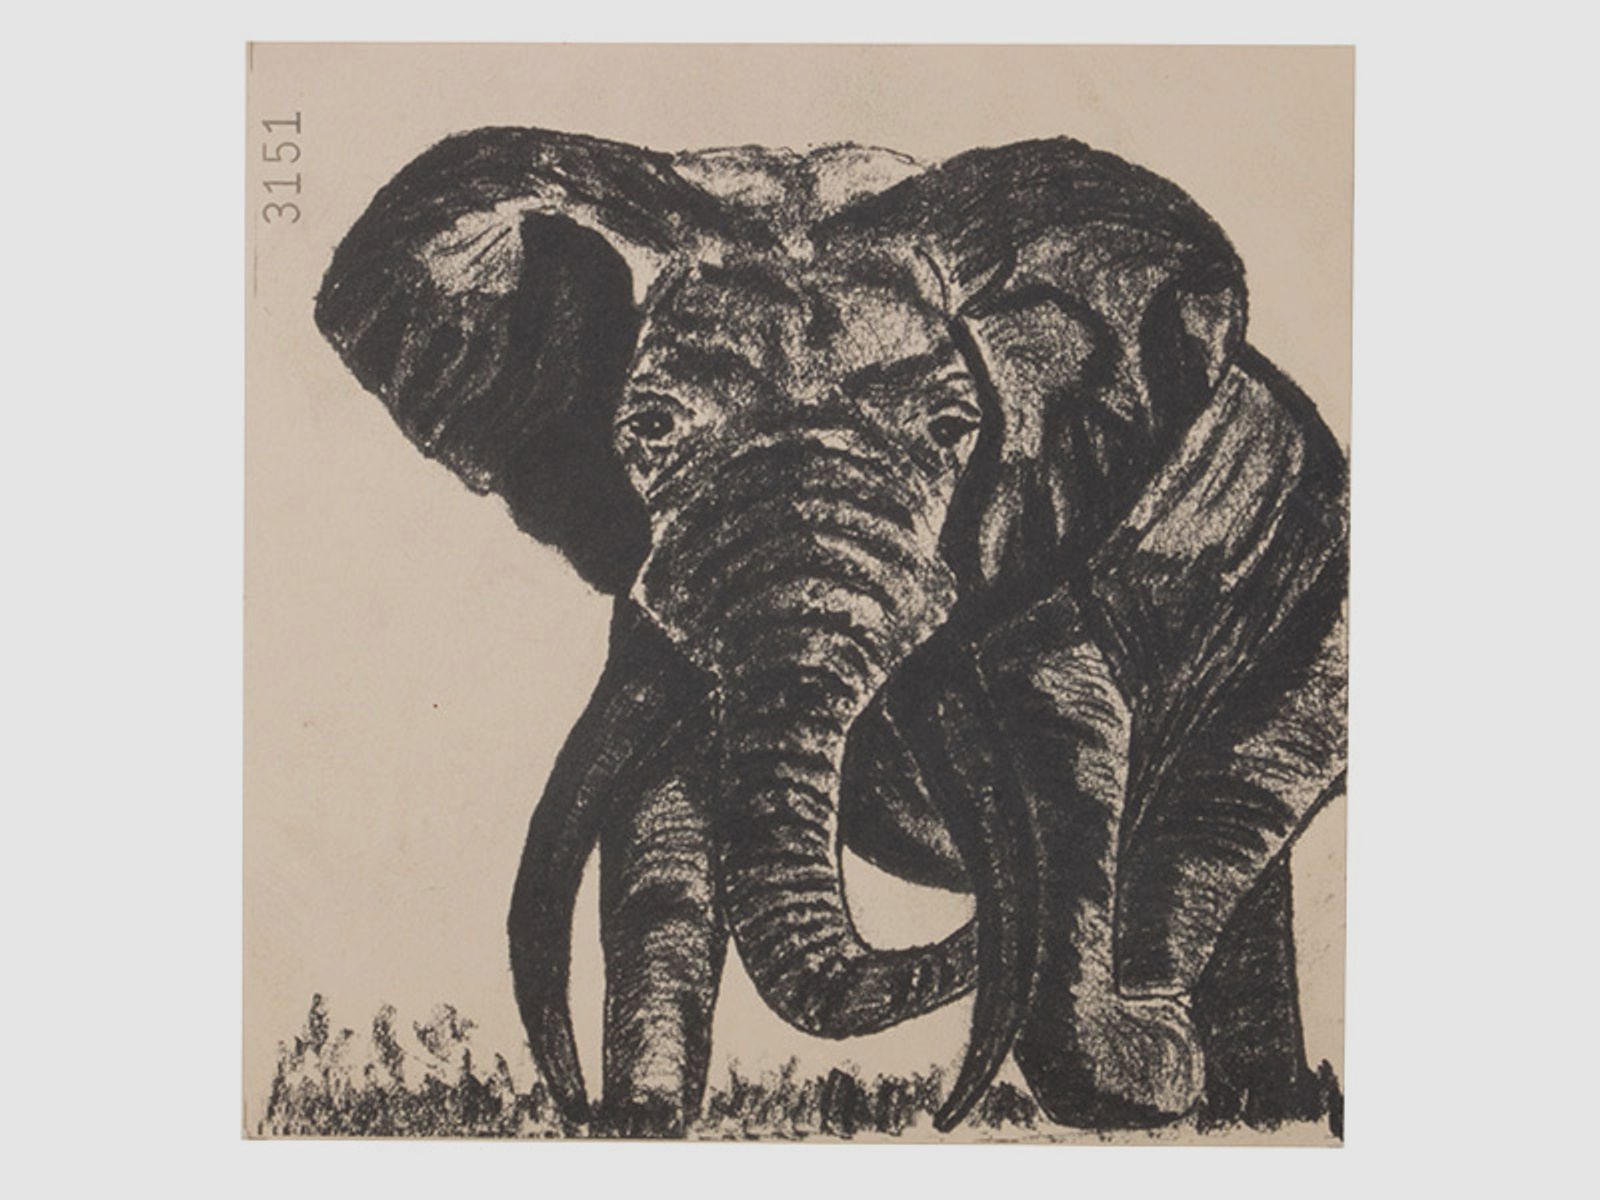 Zielscheibe Elefant 14 x 14 cm 1 StĂĽck